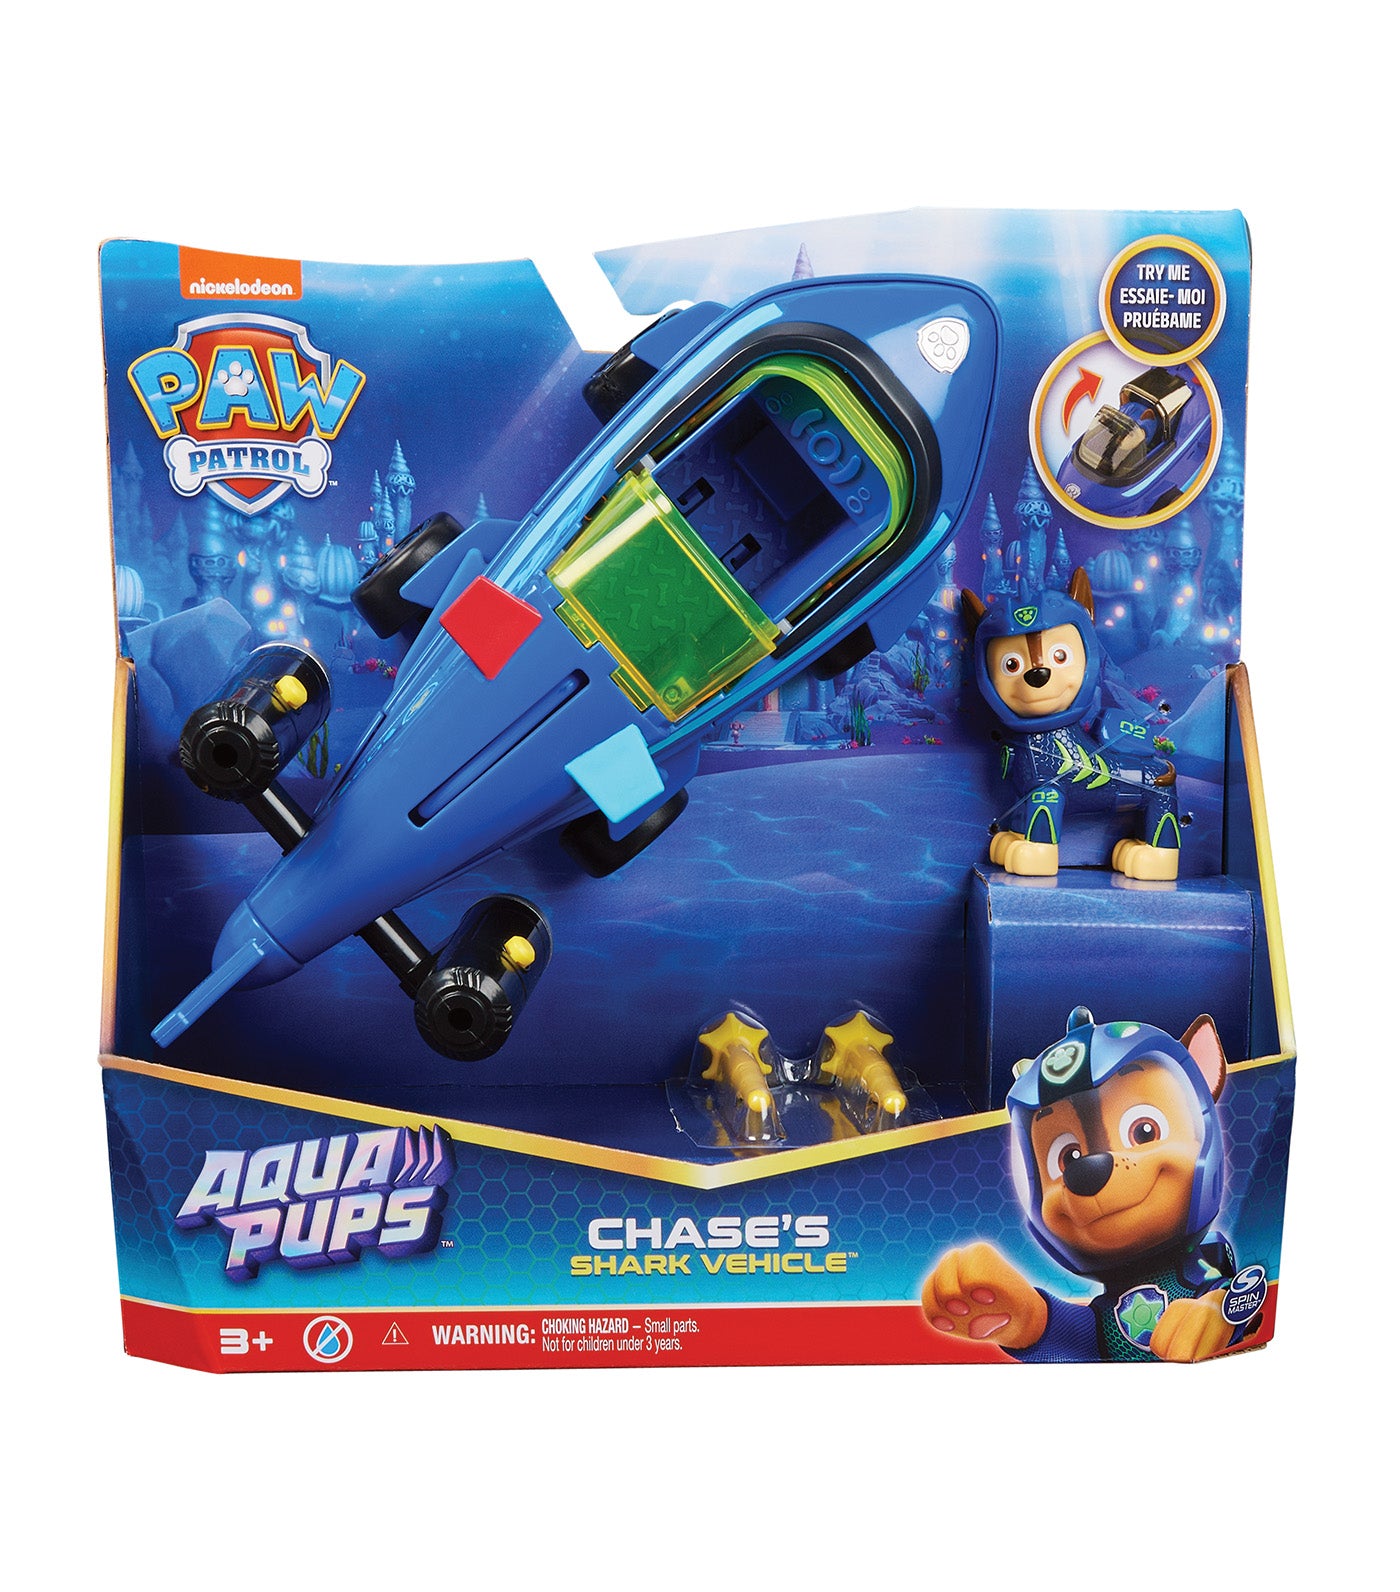 Aqua Pups - Chase's Shark Vehicle